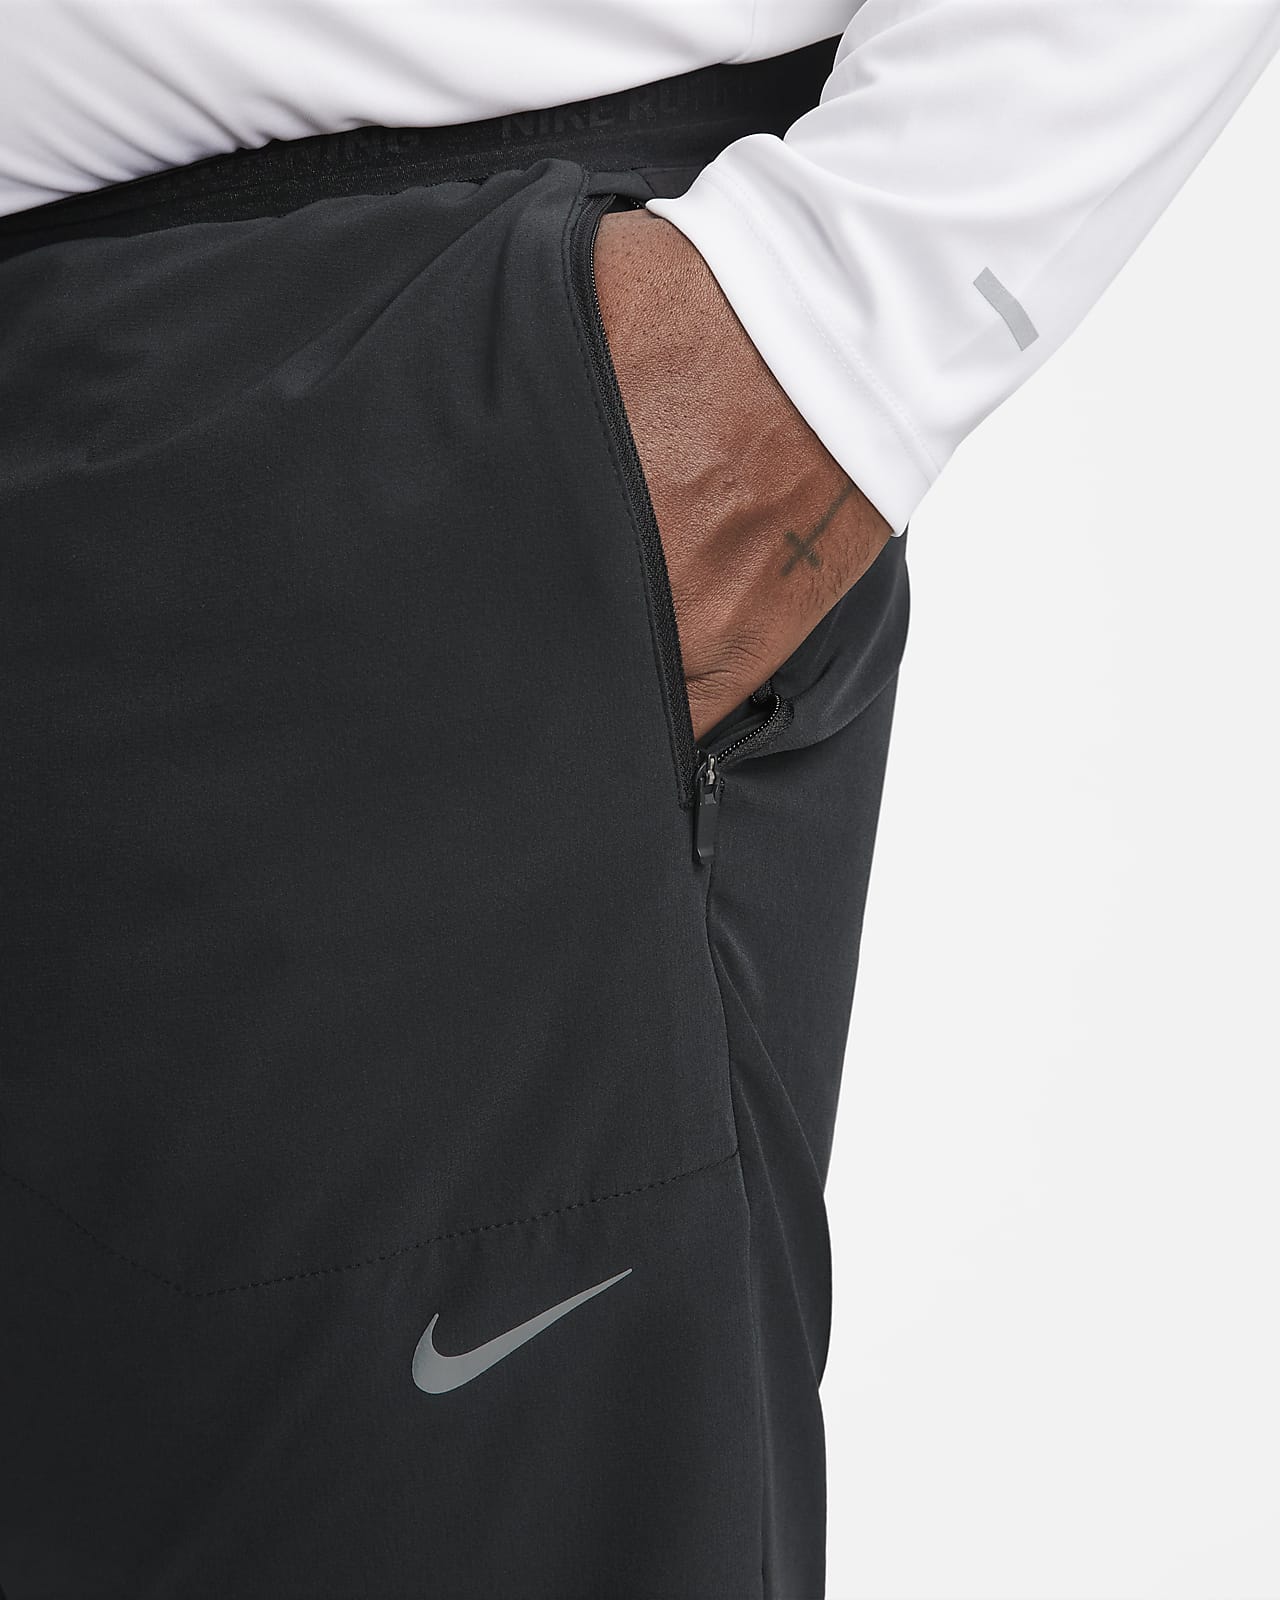 Nike DriFit academy set Graphite  12 zip  trousers